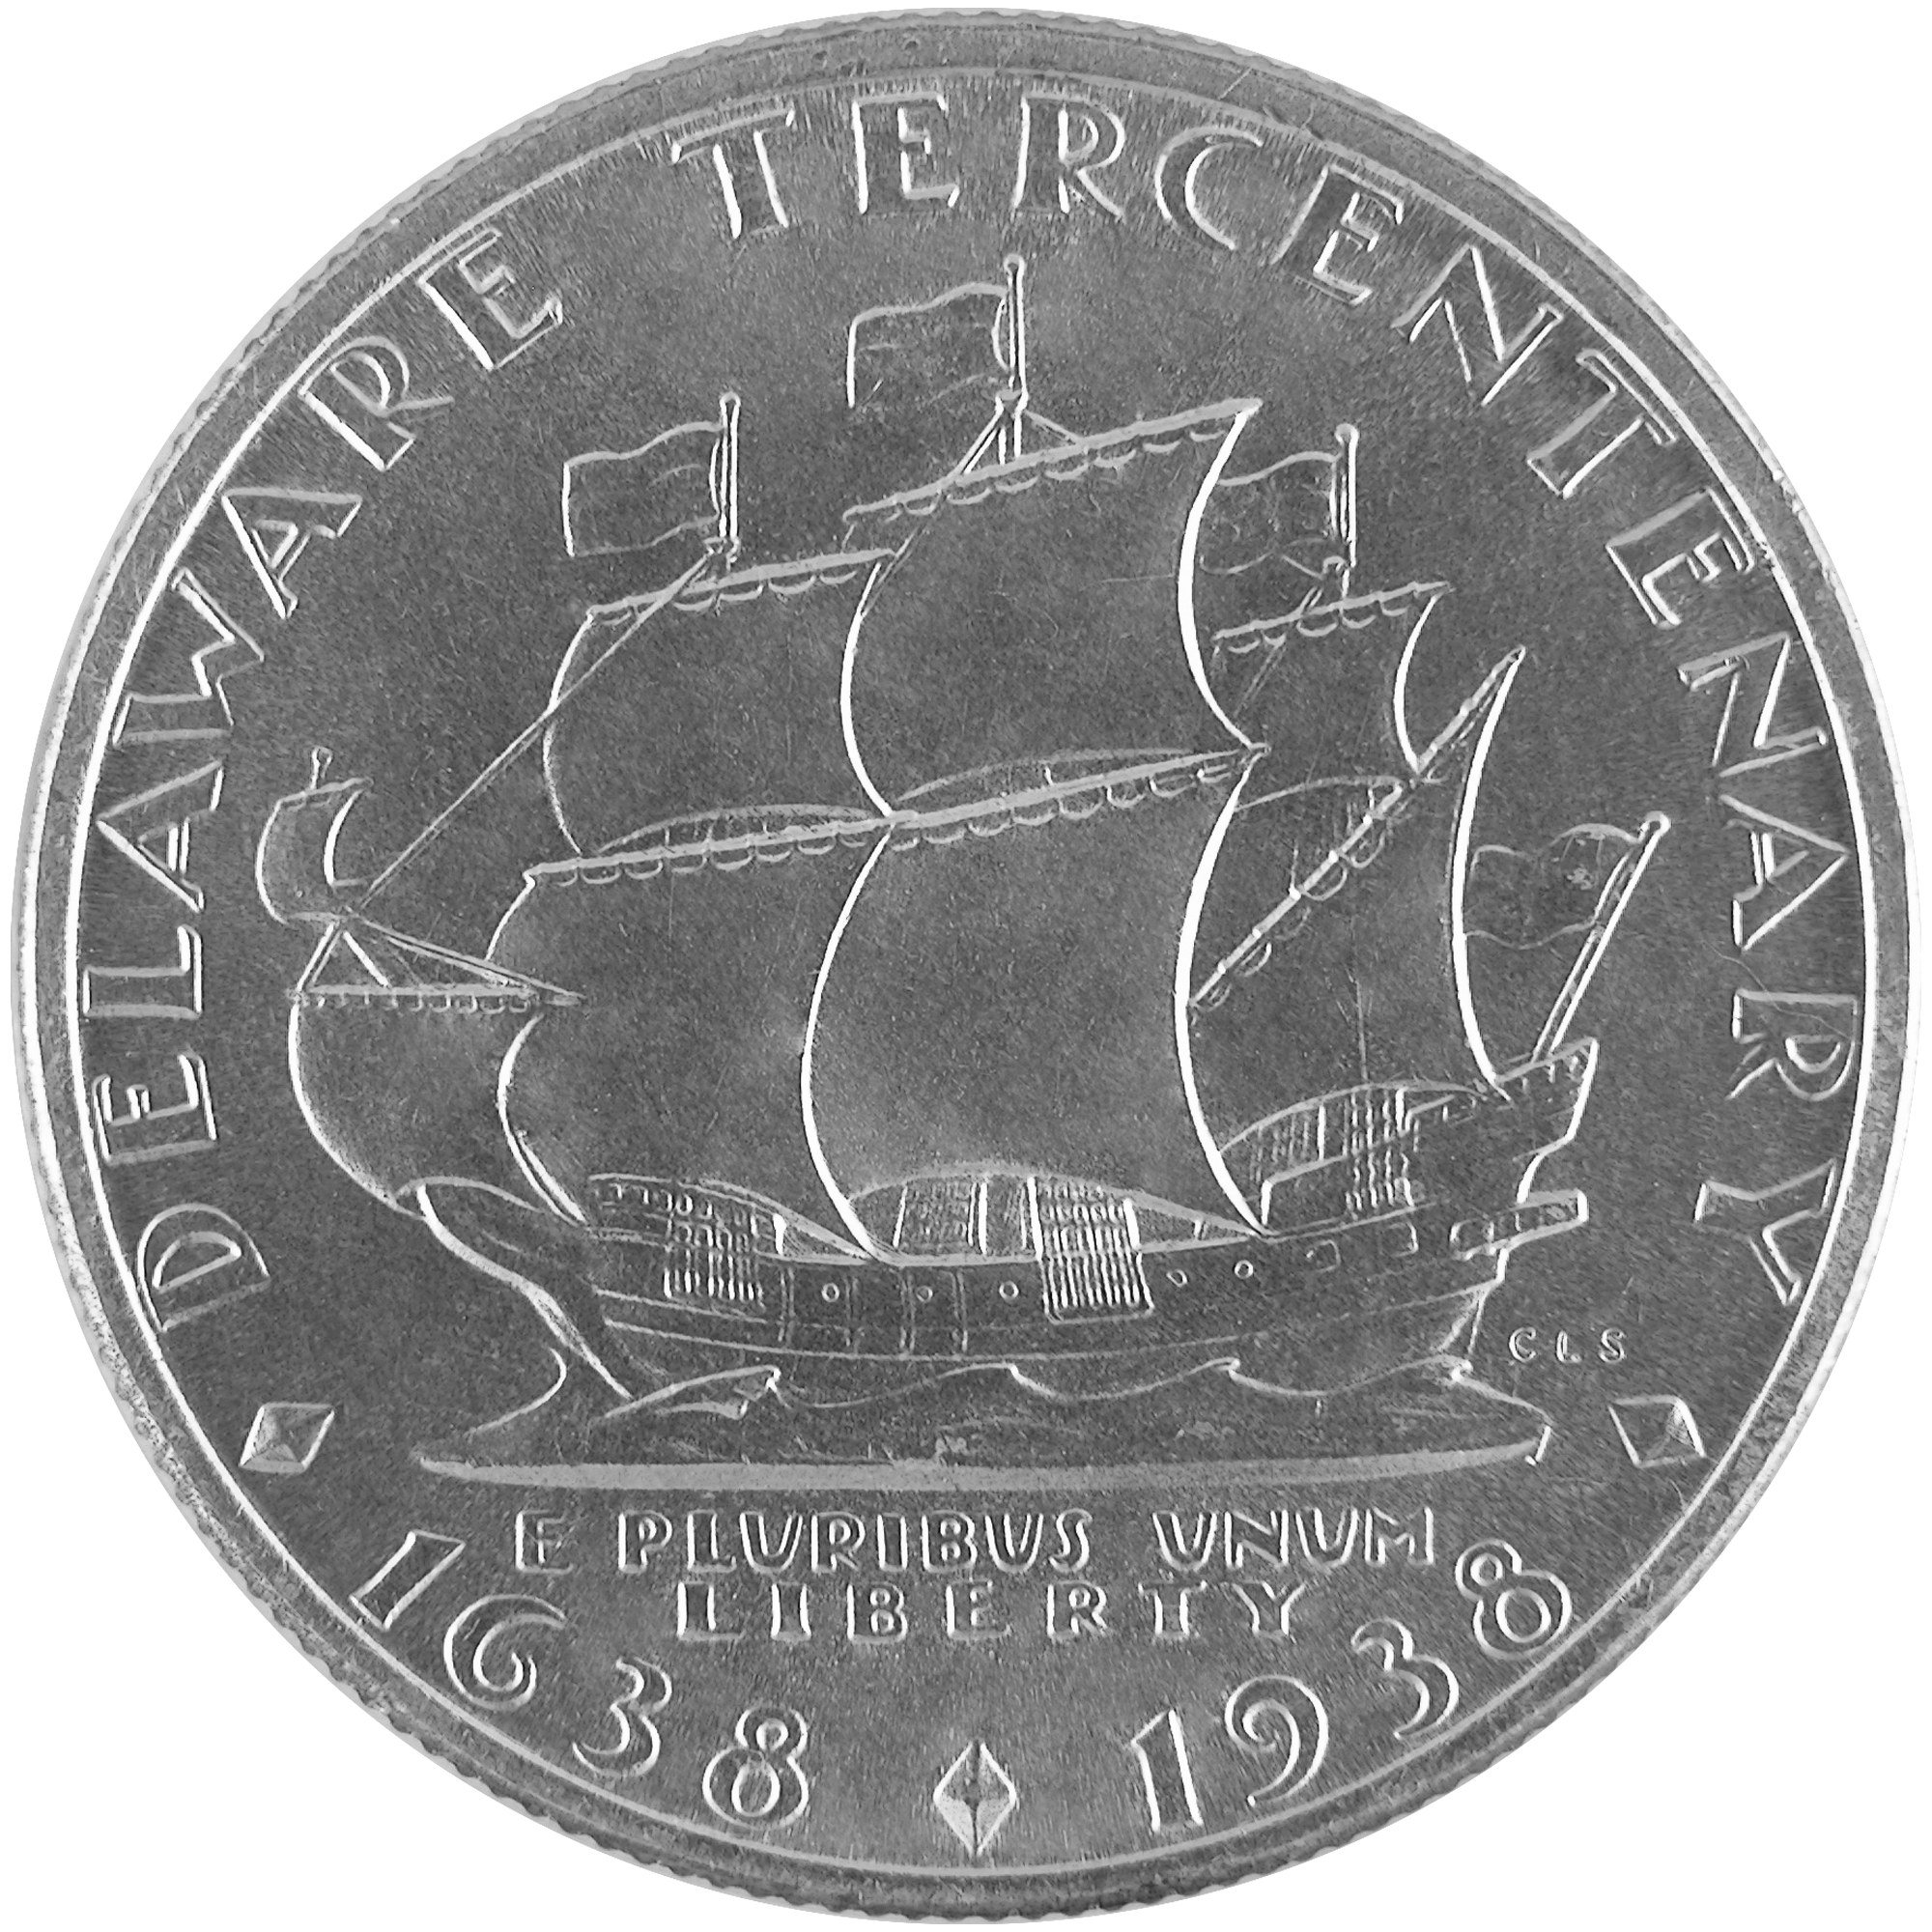 1938 Delaware Tercentenary Commemorative Silver Half Dollar Coin Reverse